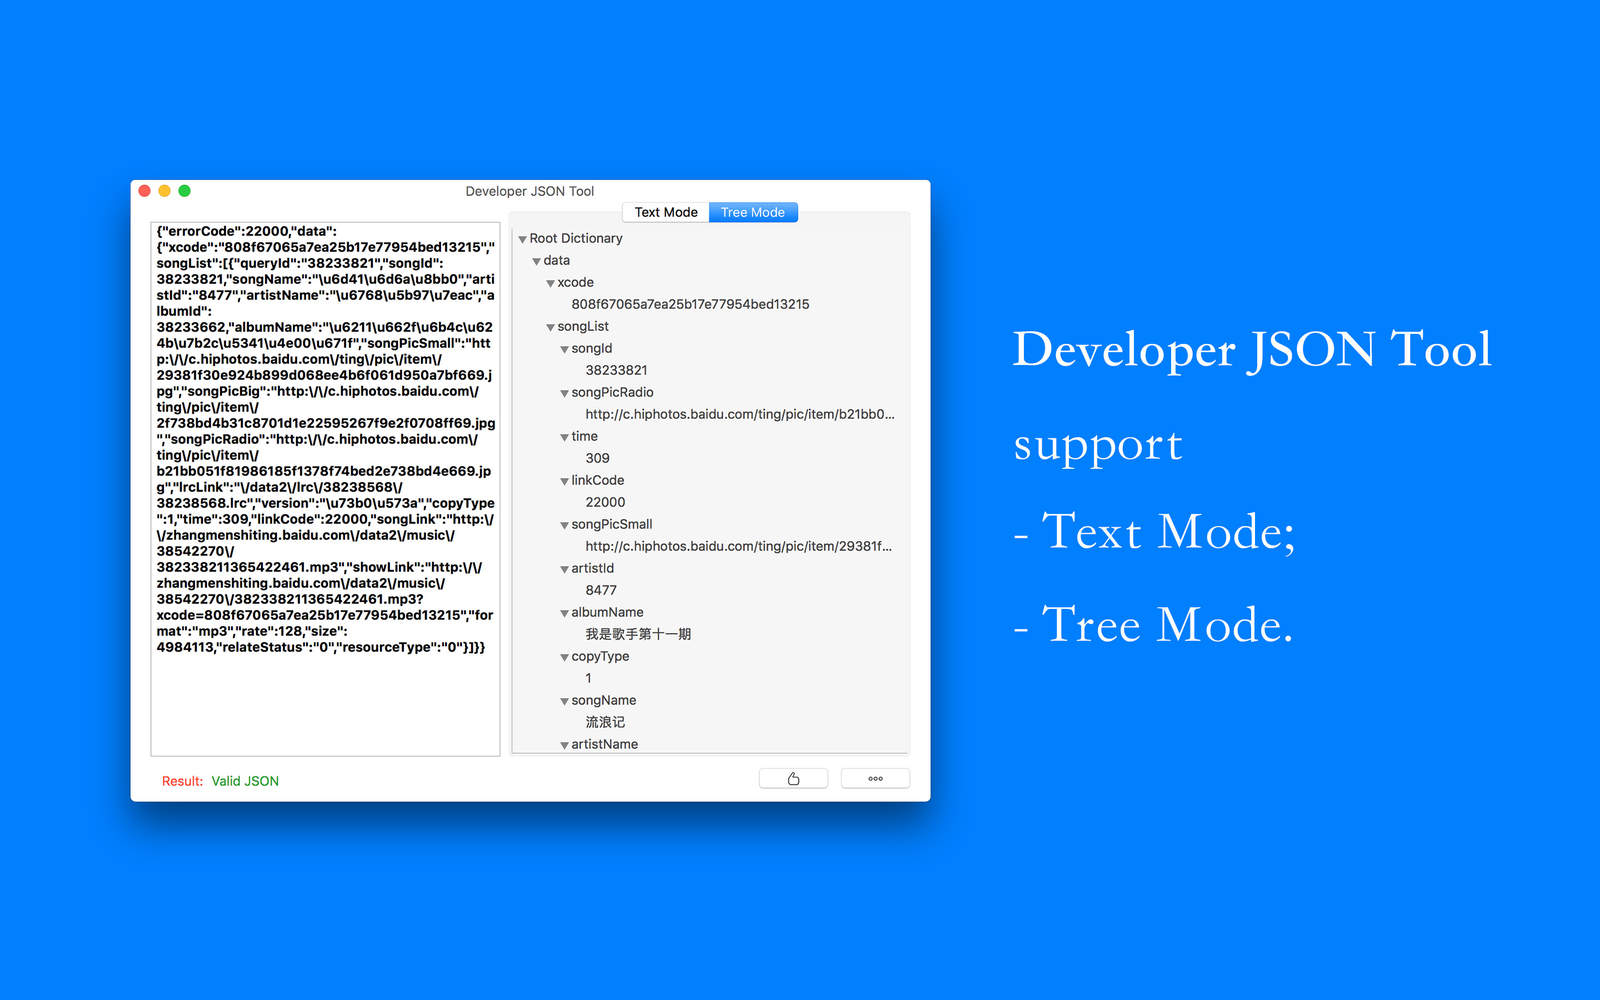 Developer JSON Tool 17.0 : Main Window